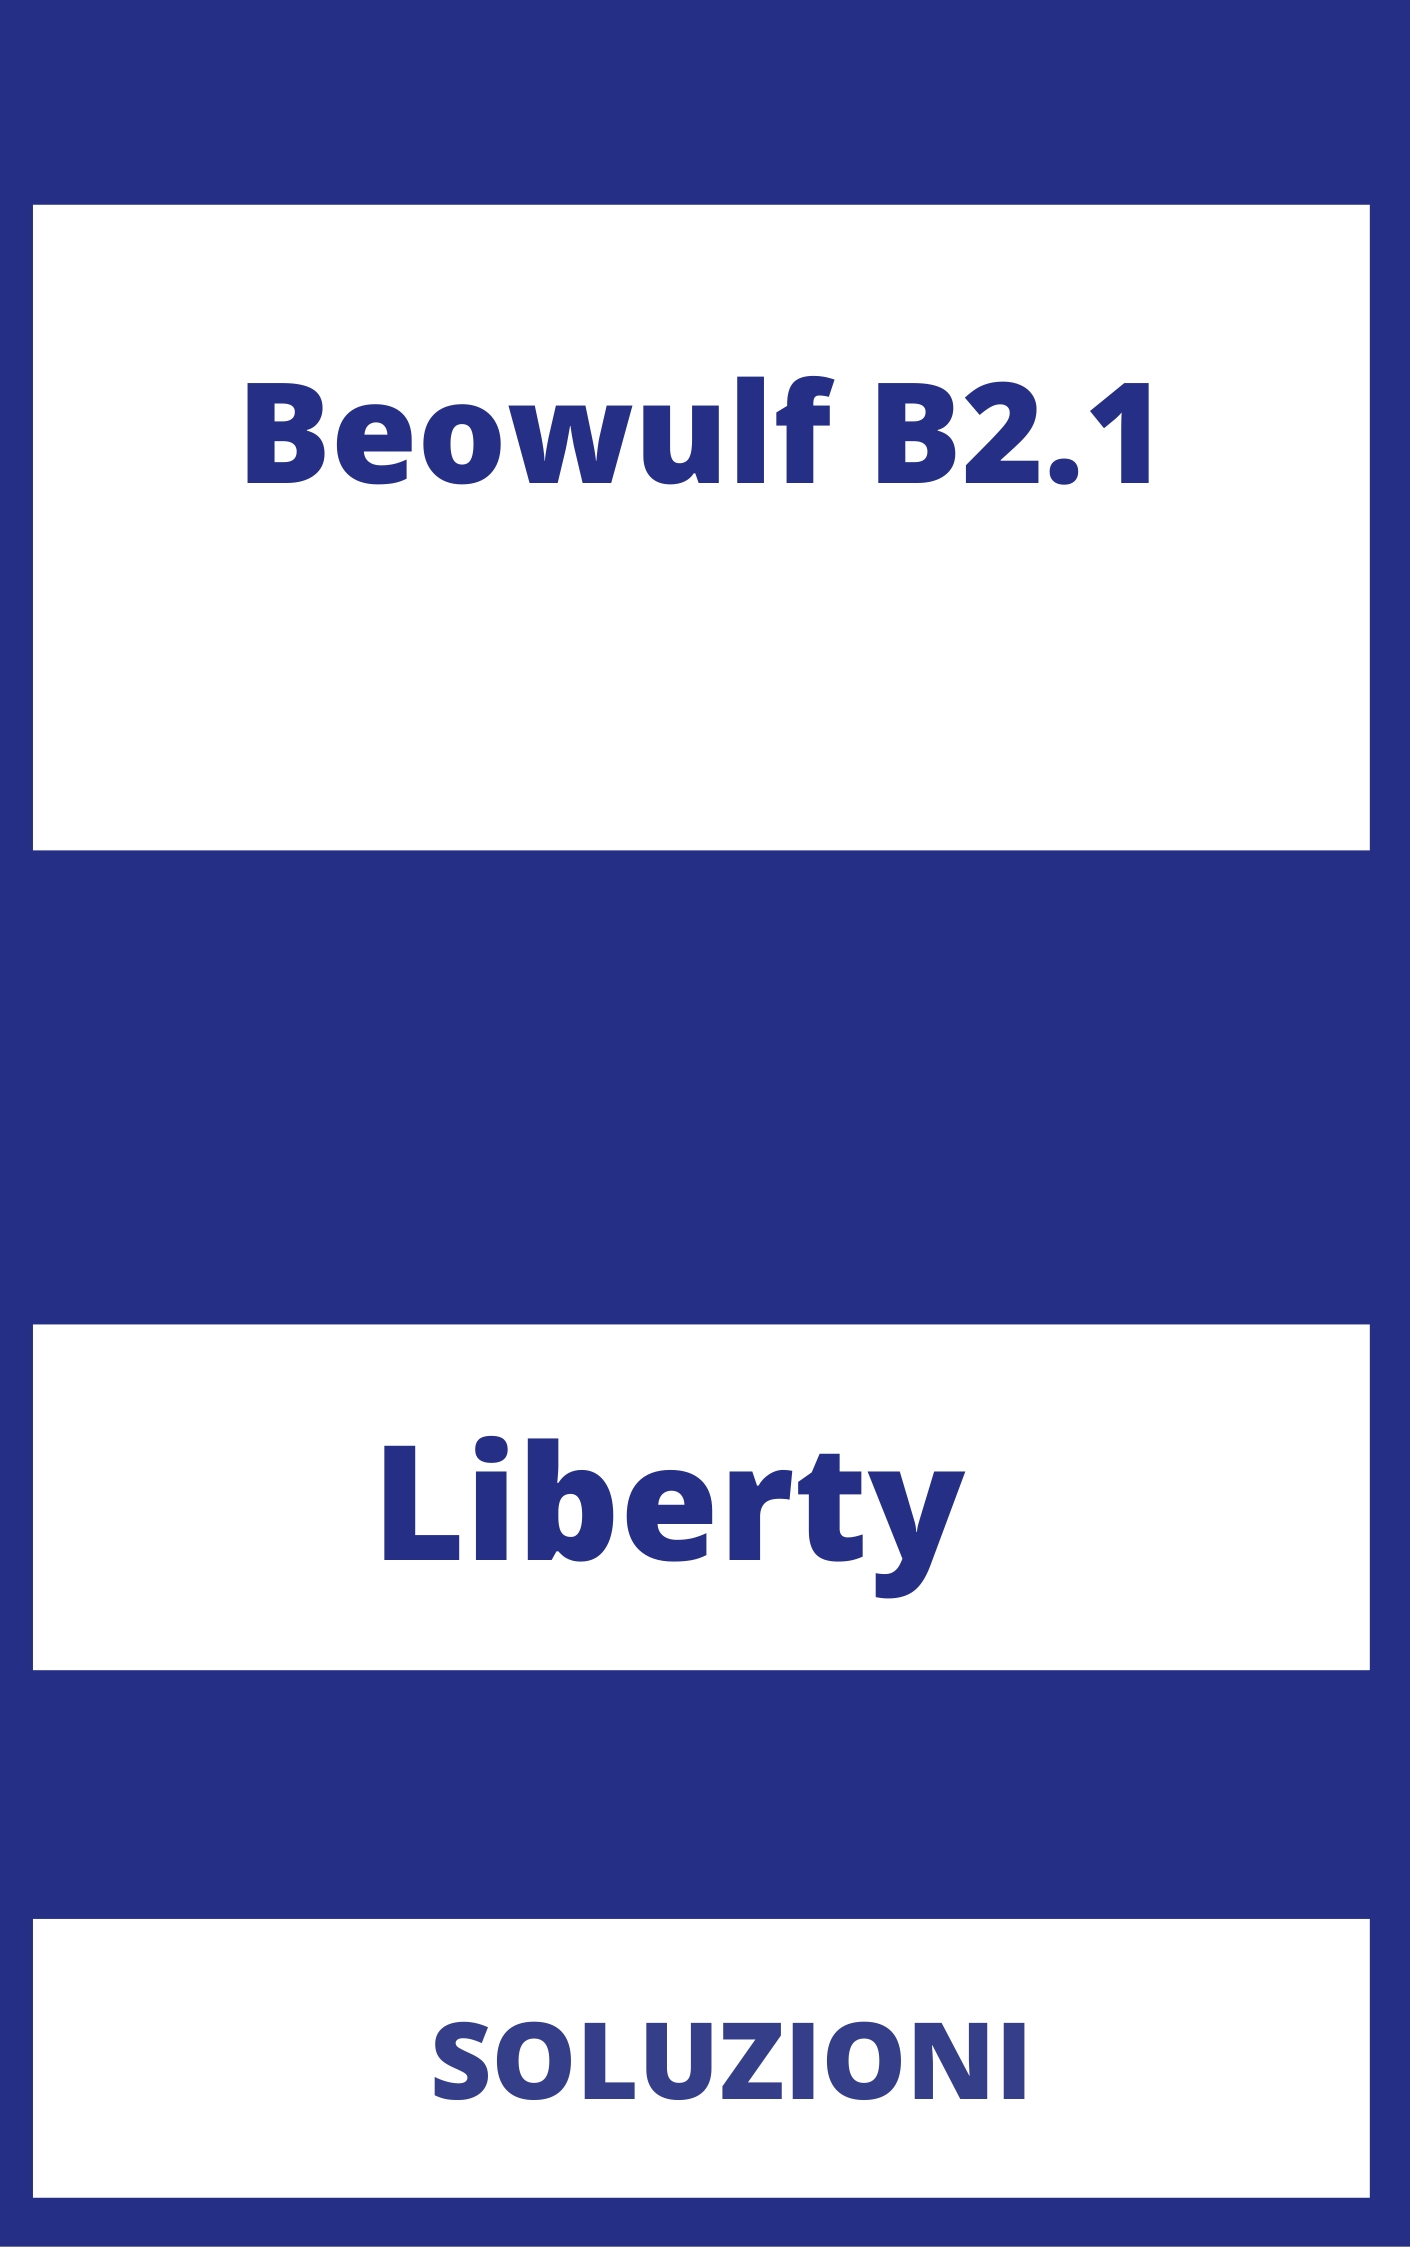 Beowulf B2.1 Soluzioni